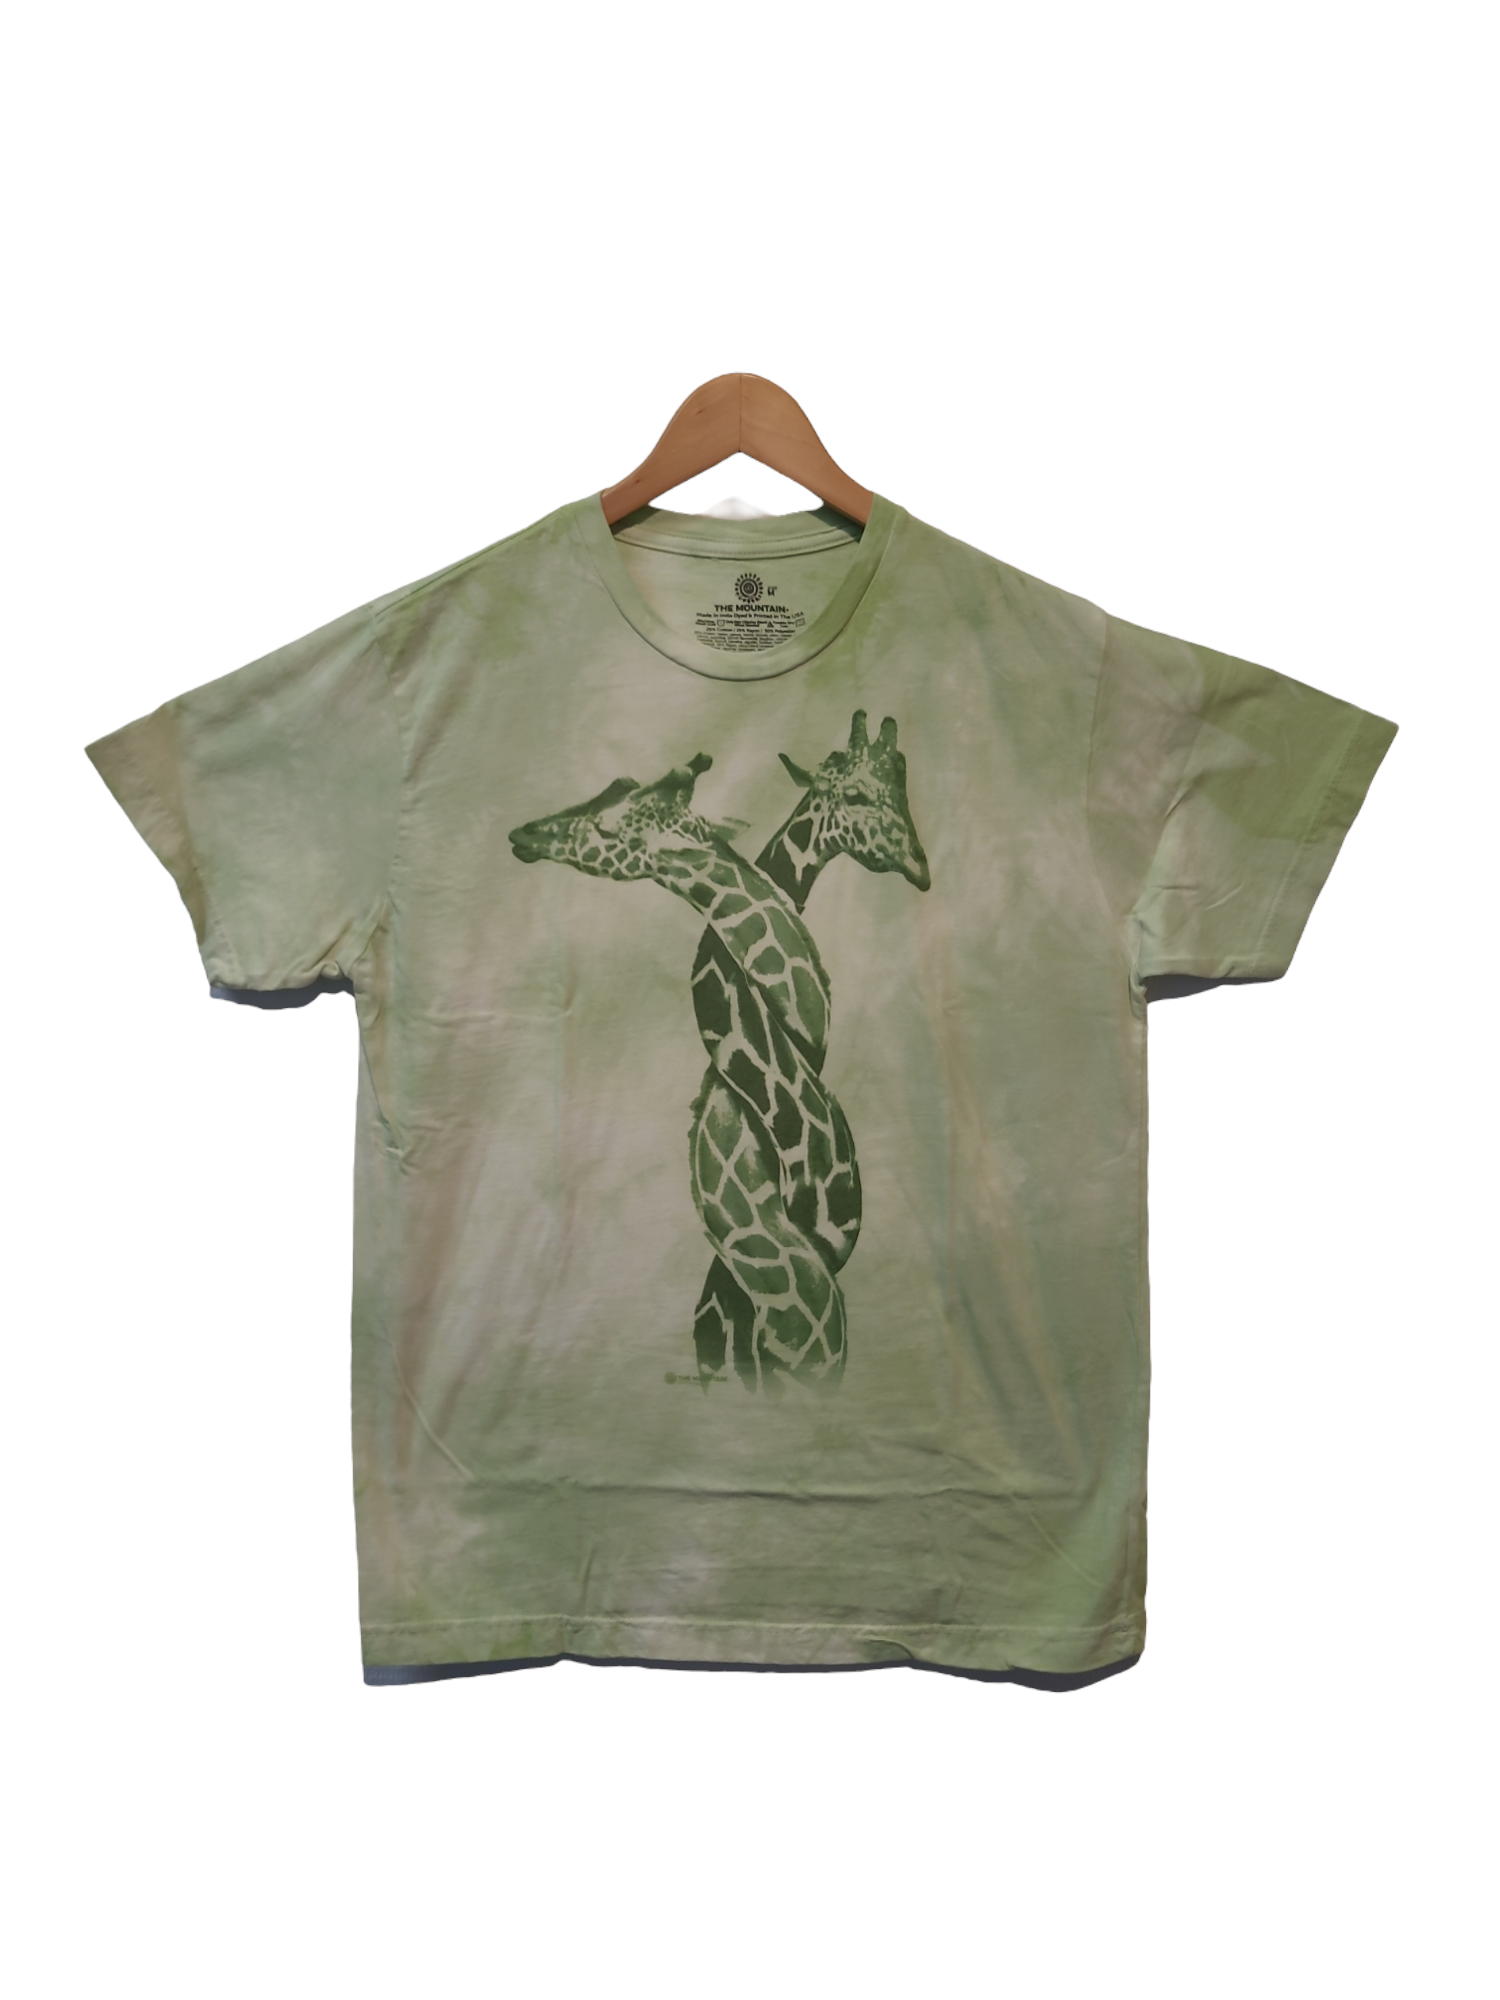 Tangled Giraffes Green Tri-Blend